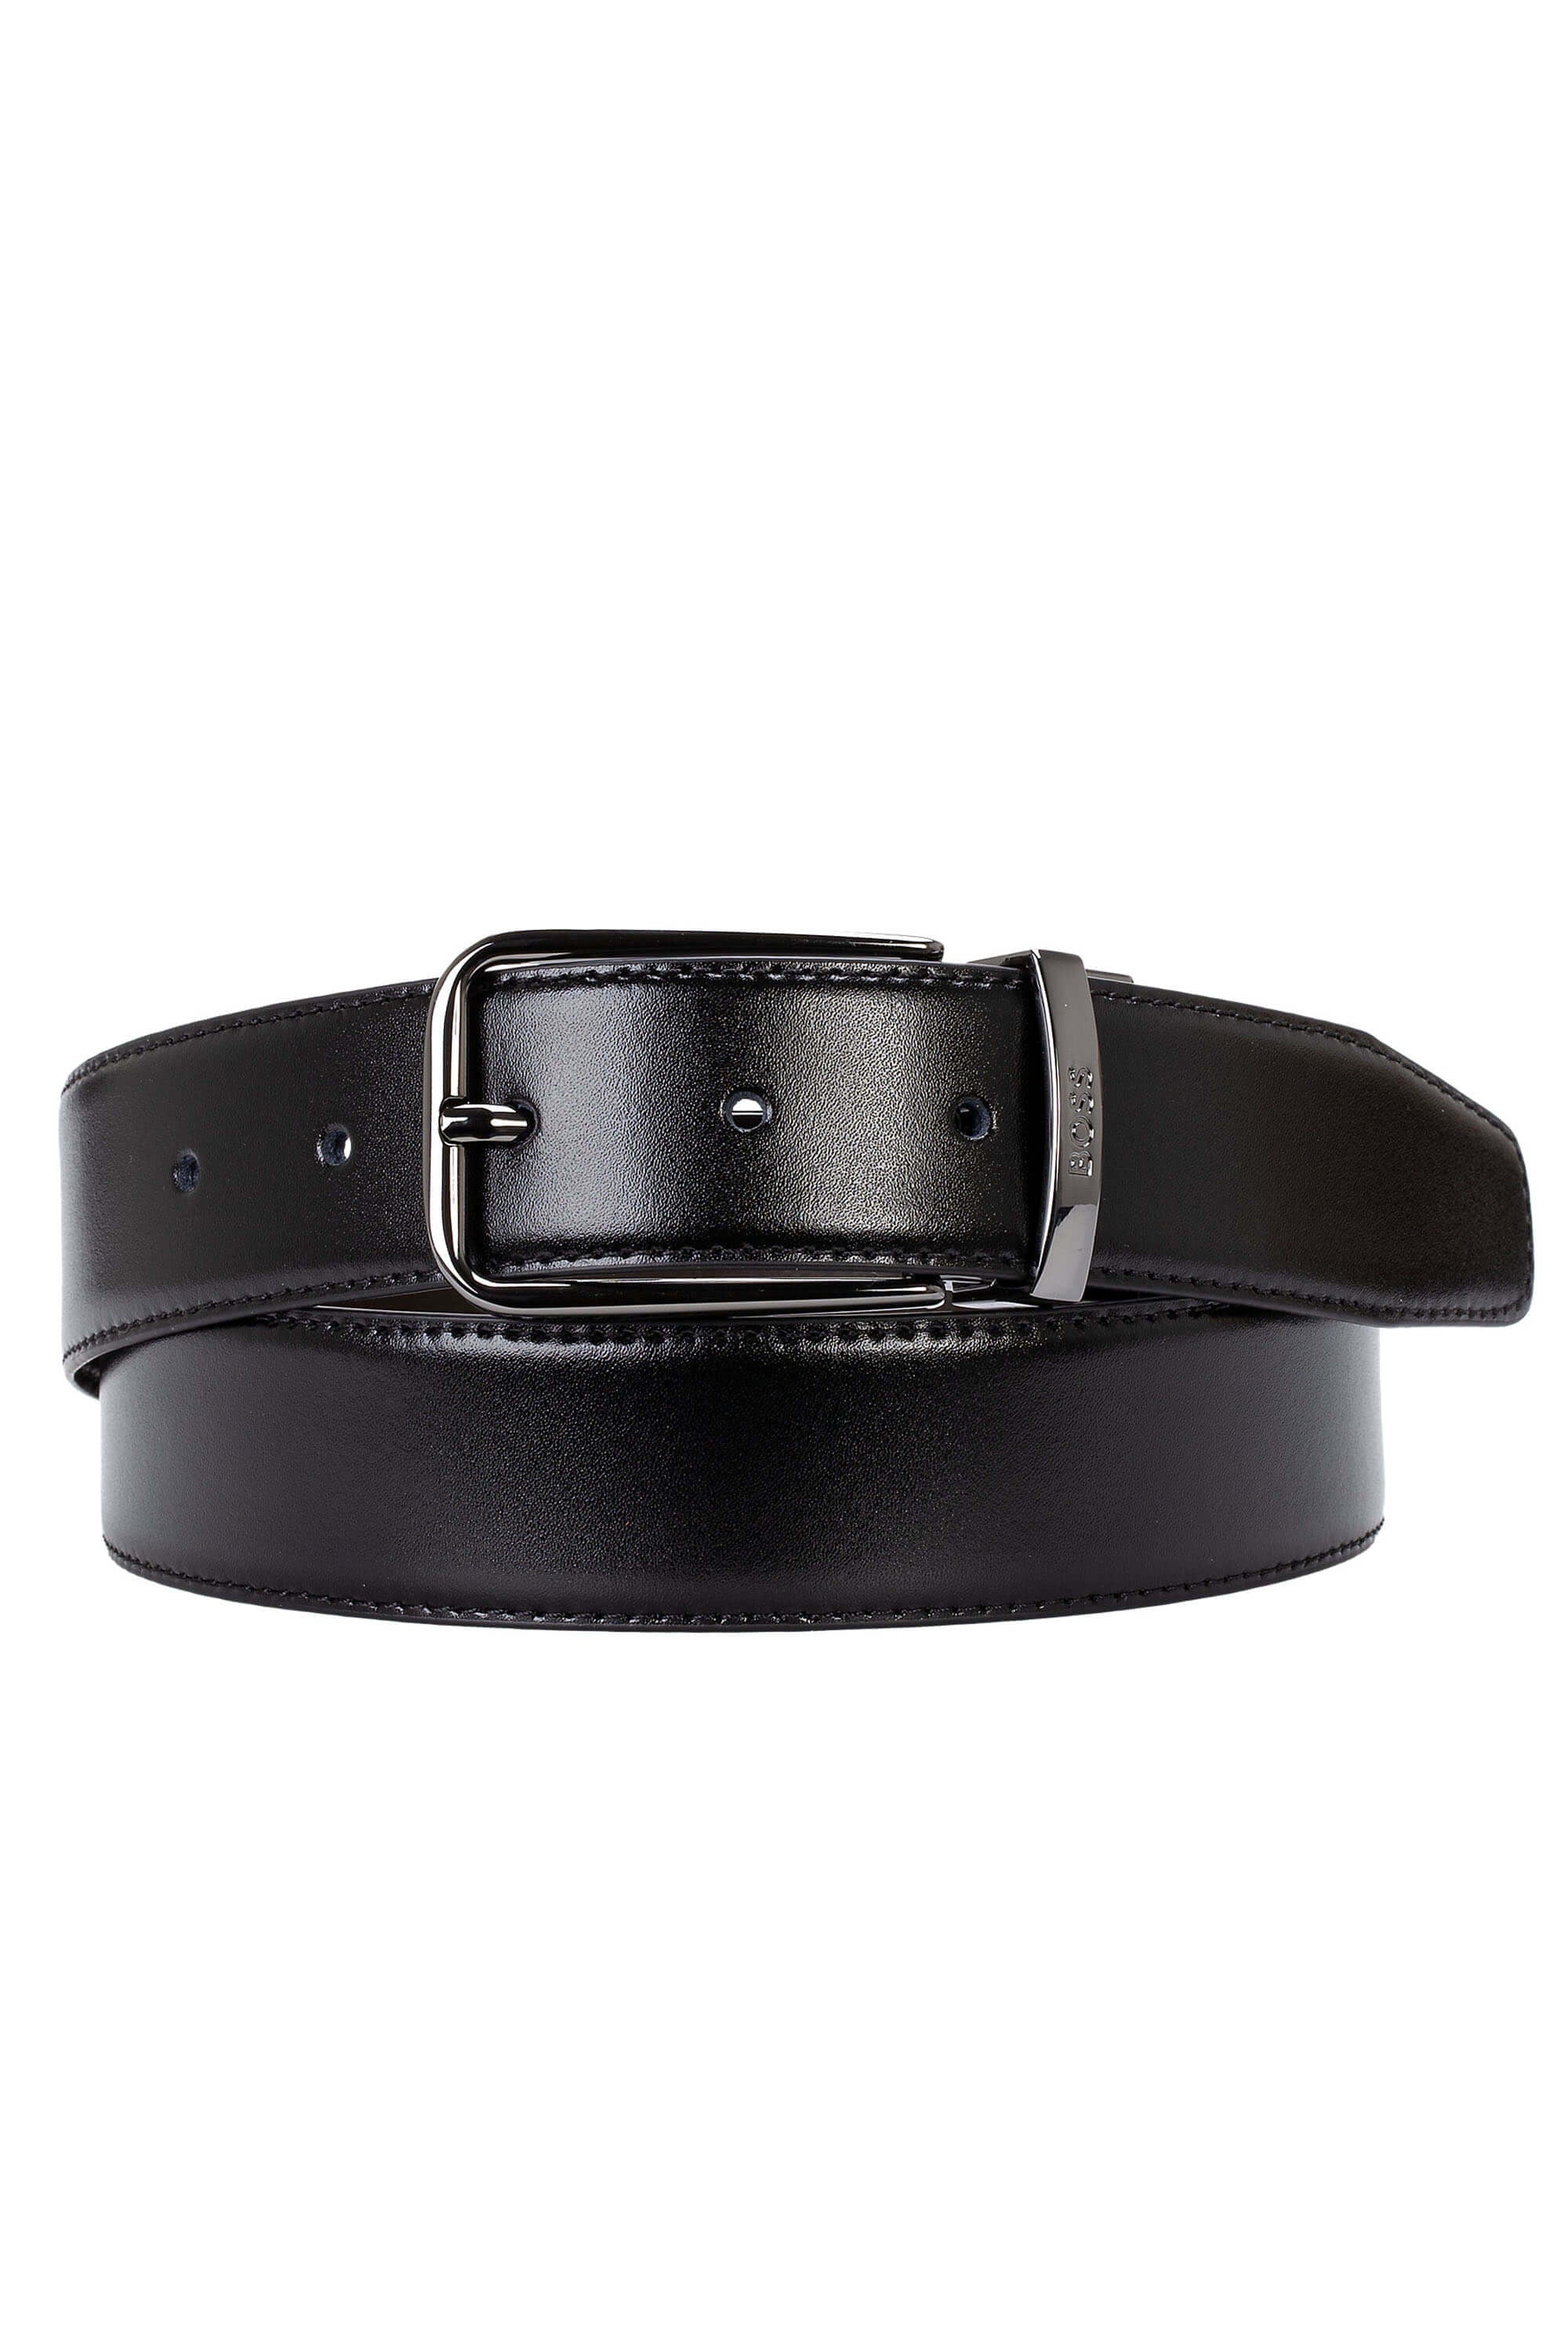 Hugo Boss Ochuck Leather Black Belt